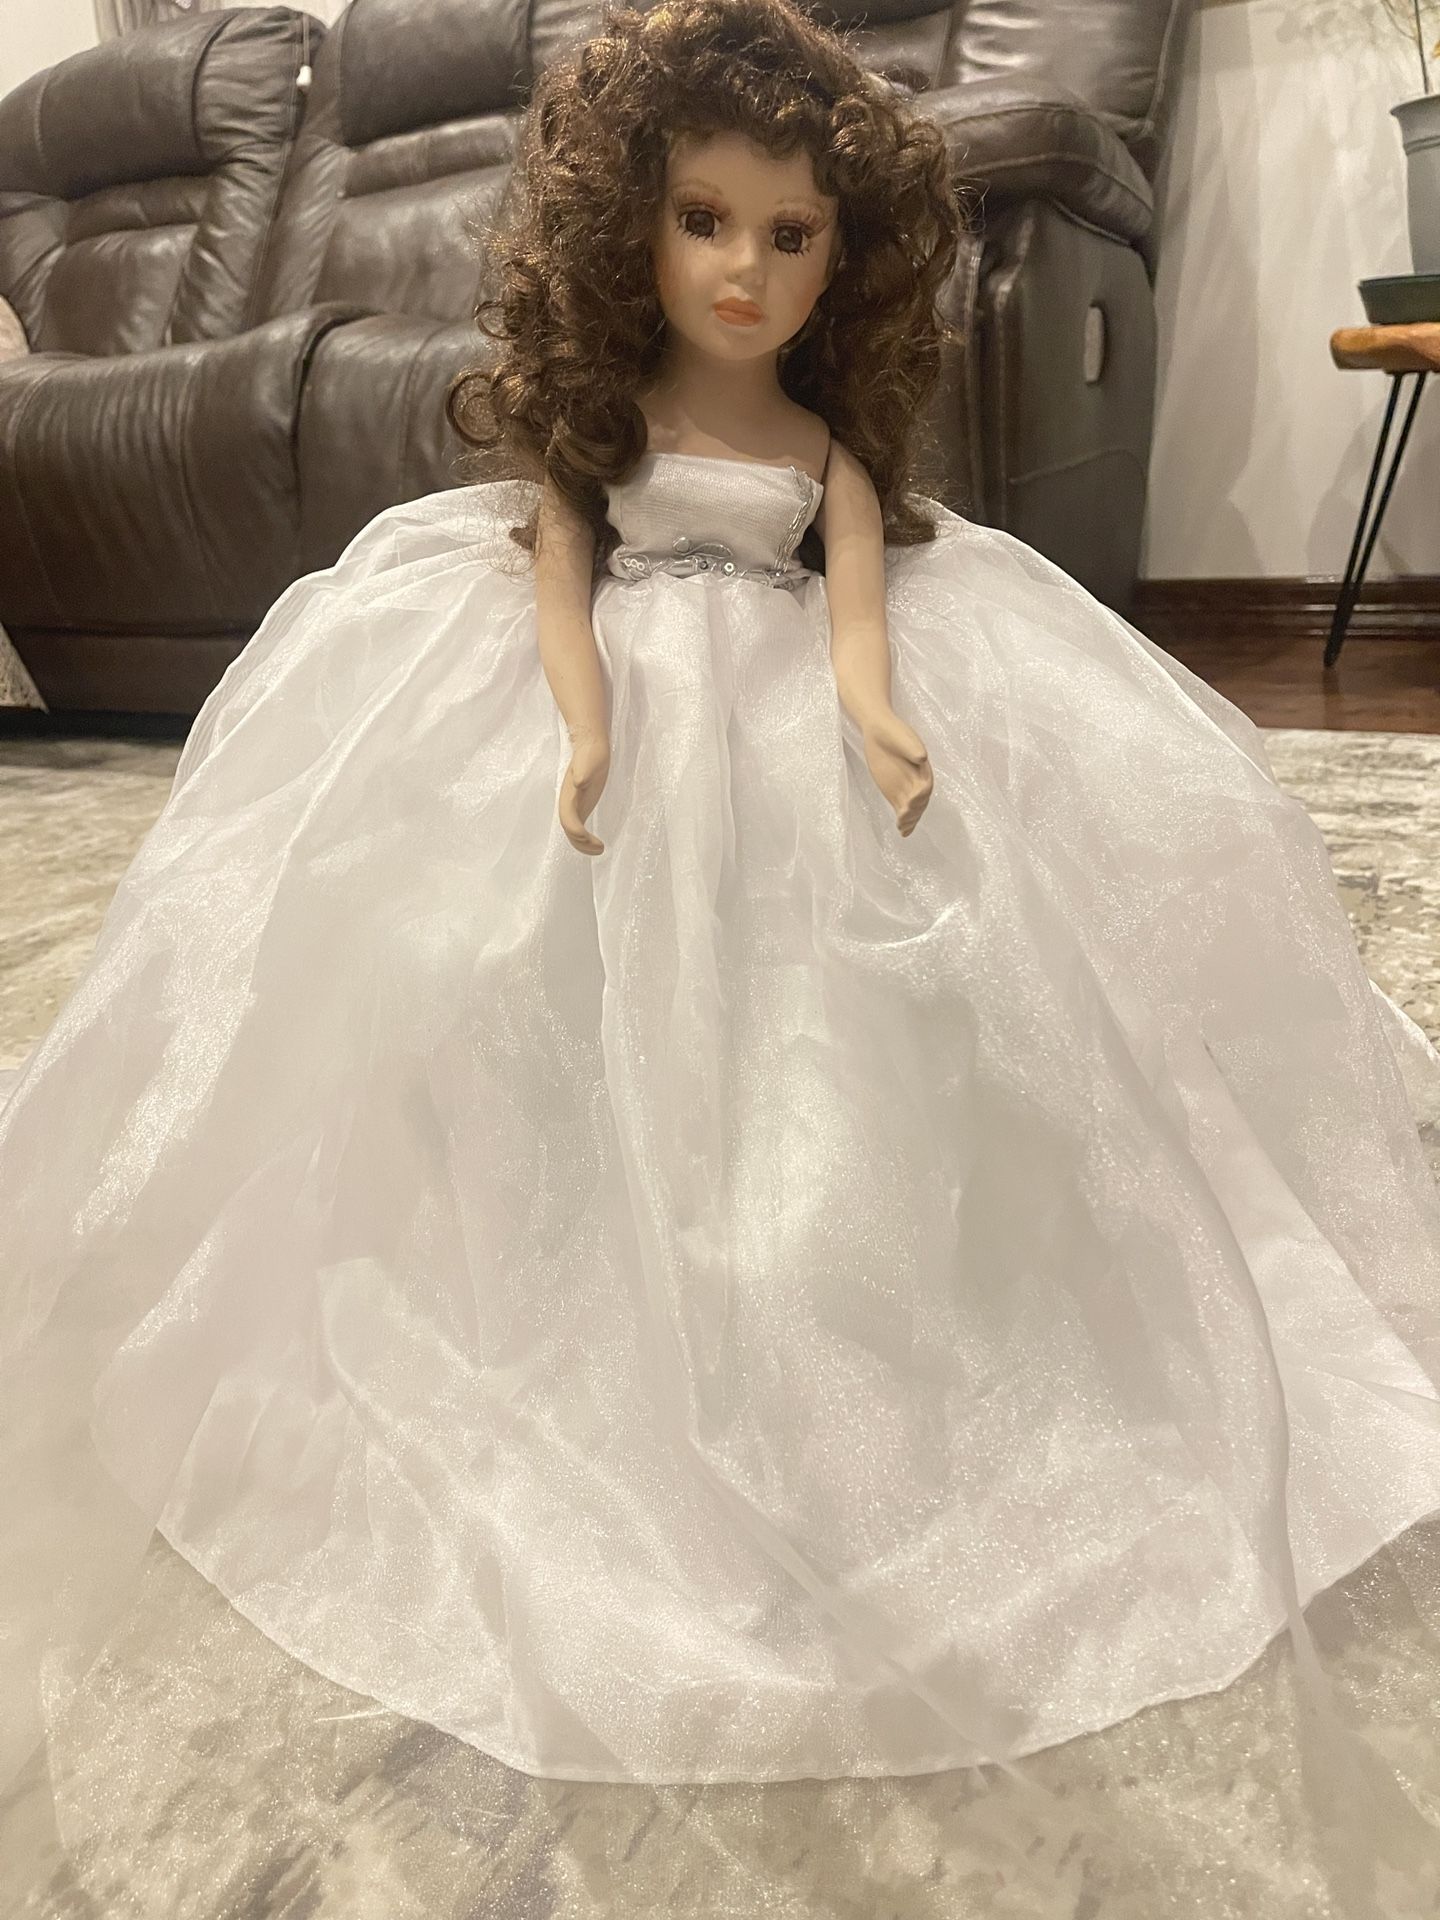 Beautiful Porcelain large doll in White Beautiful Wedding Dress